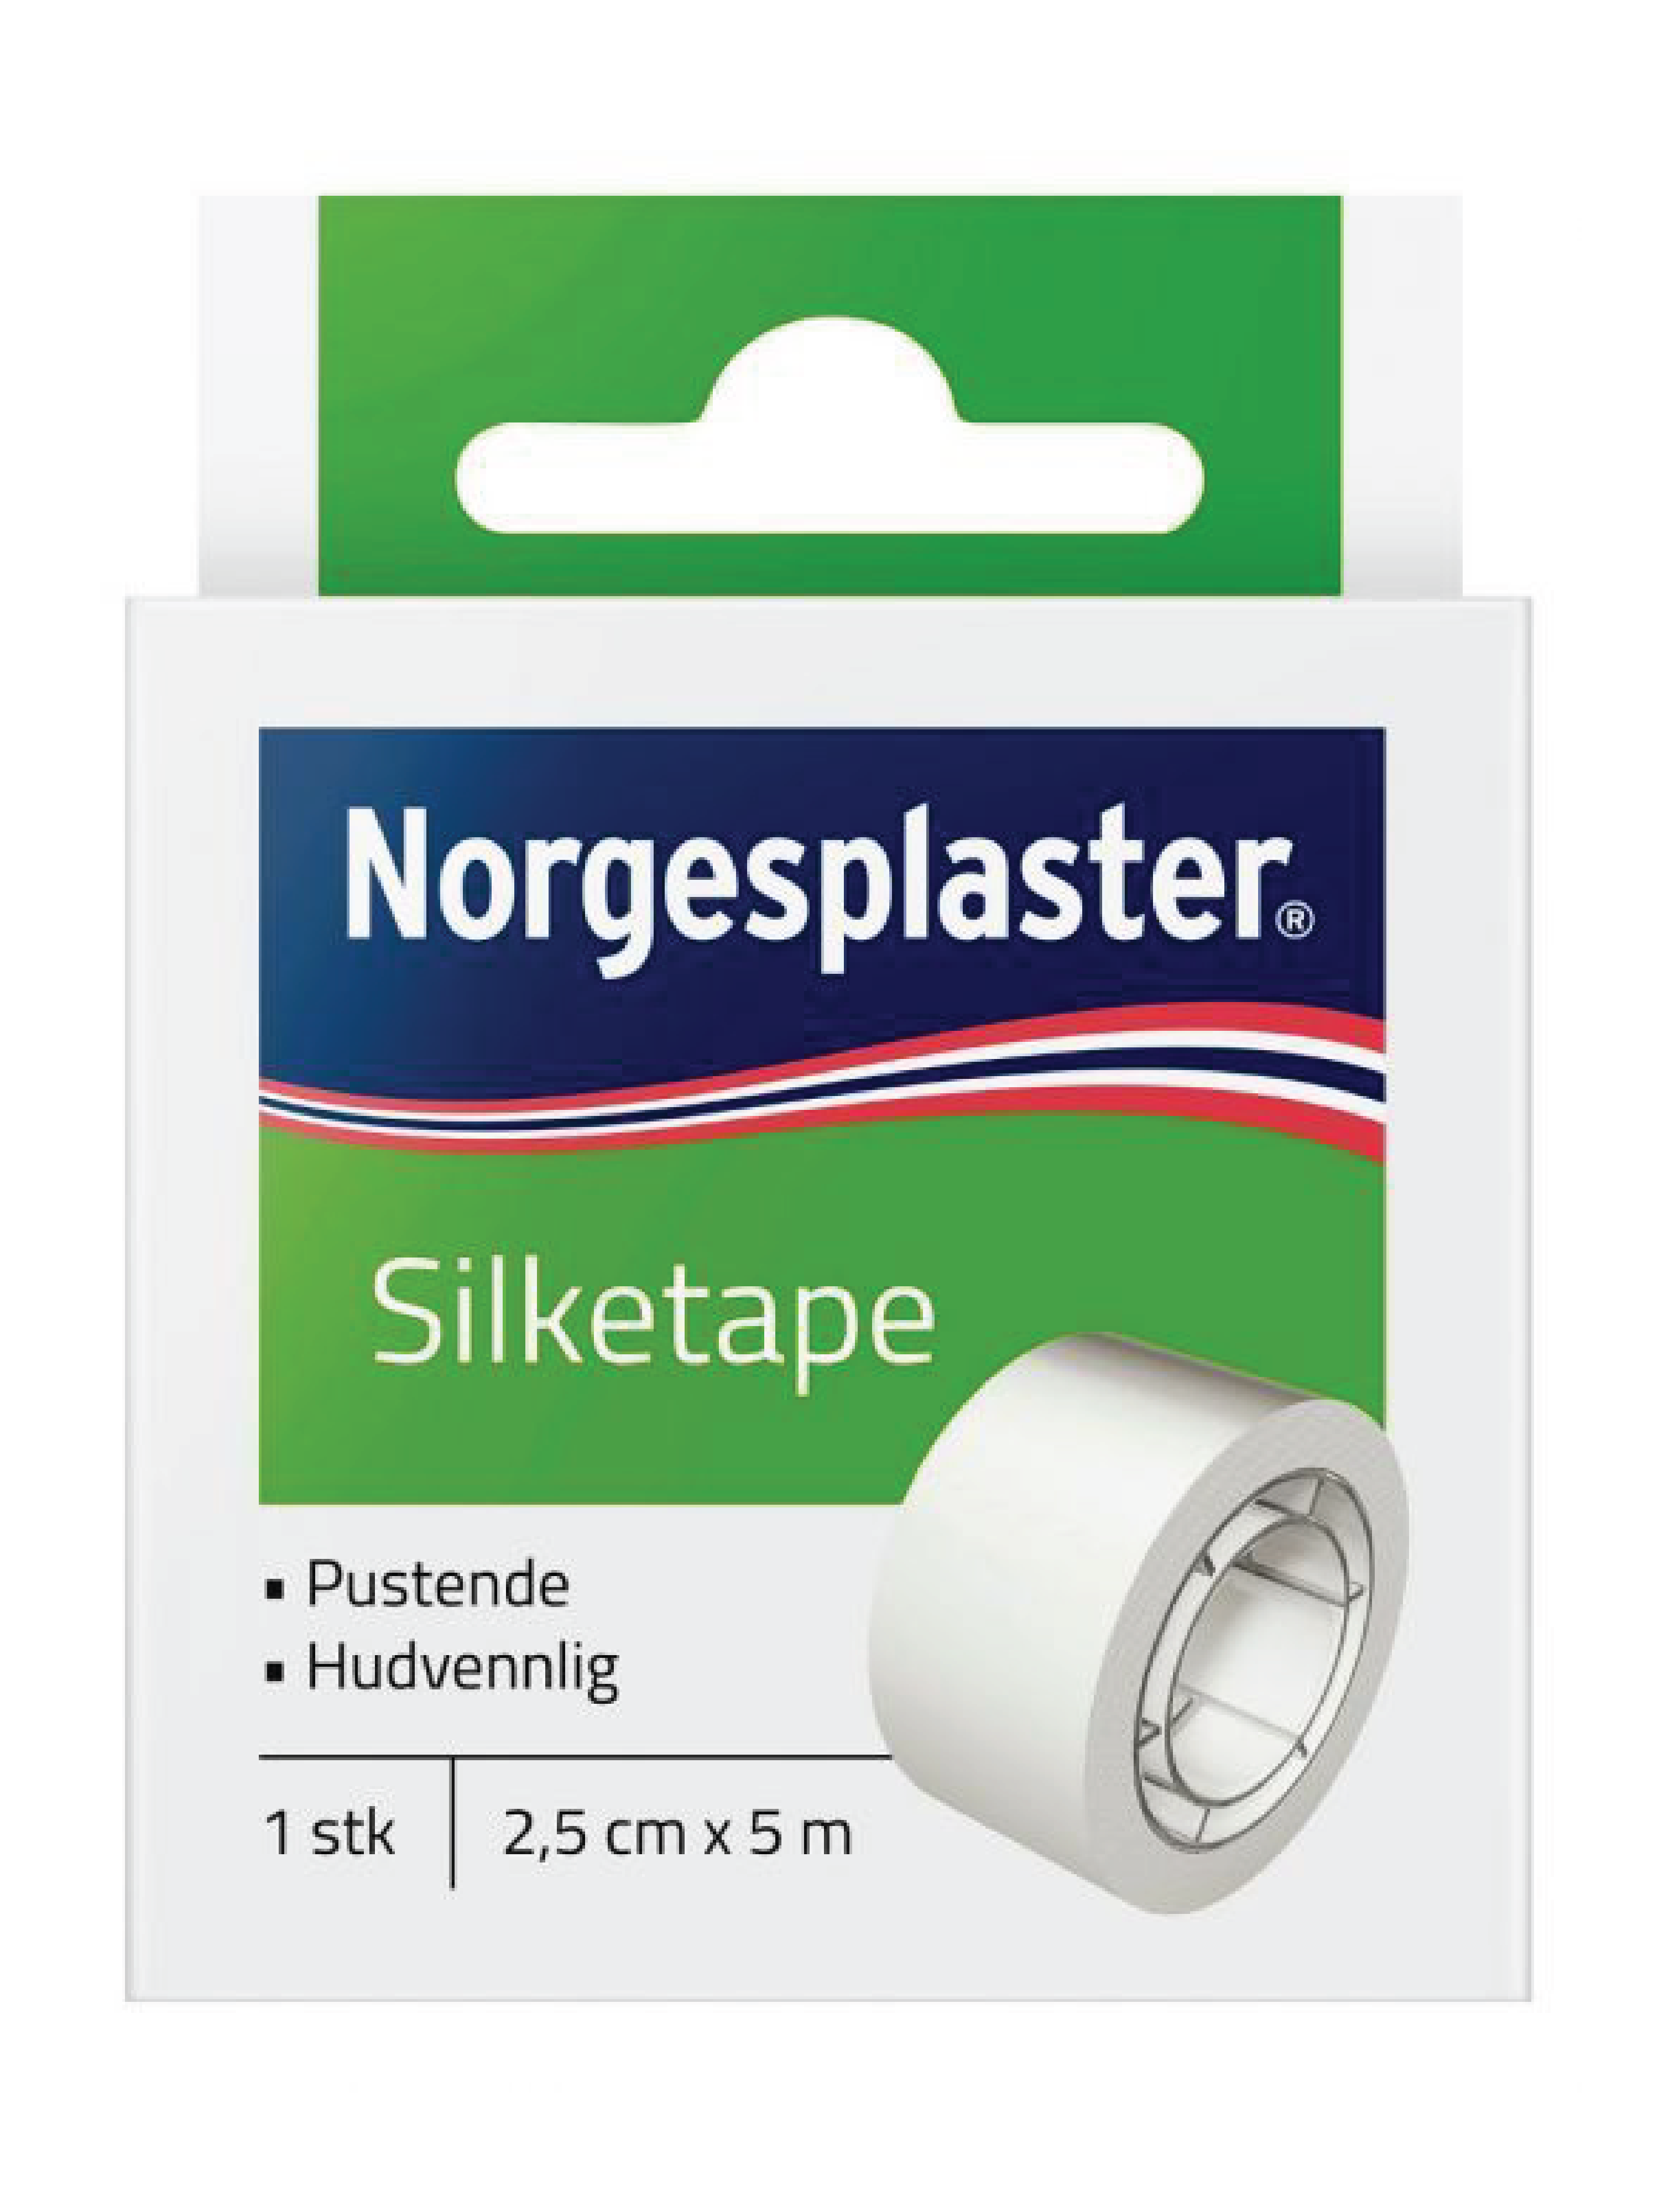 Norgesplaster Silketape, 2,5 cm x 5 m, 1 stk.